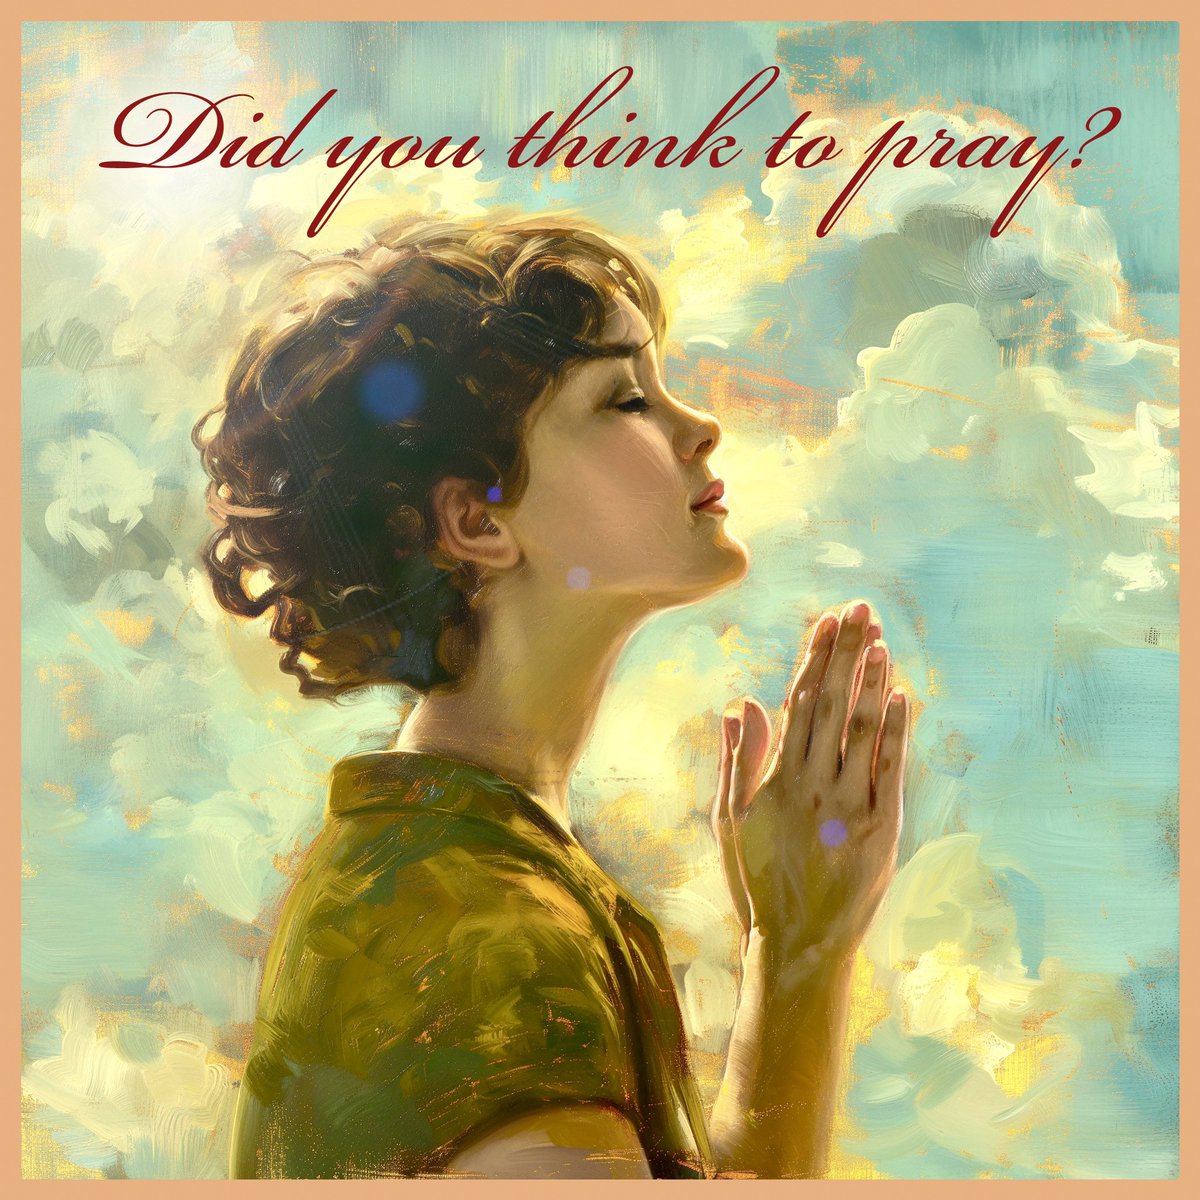 Don’t discount the power of prayer. 
#PrayAlways